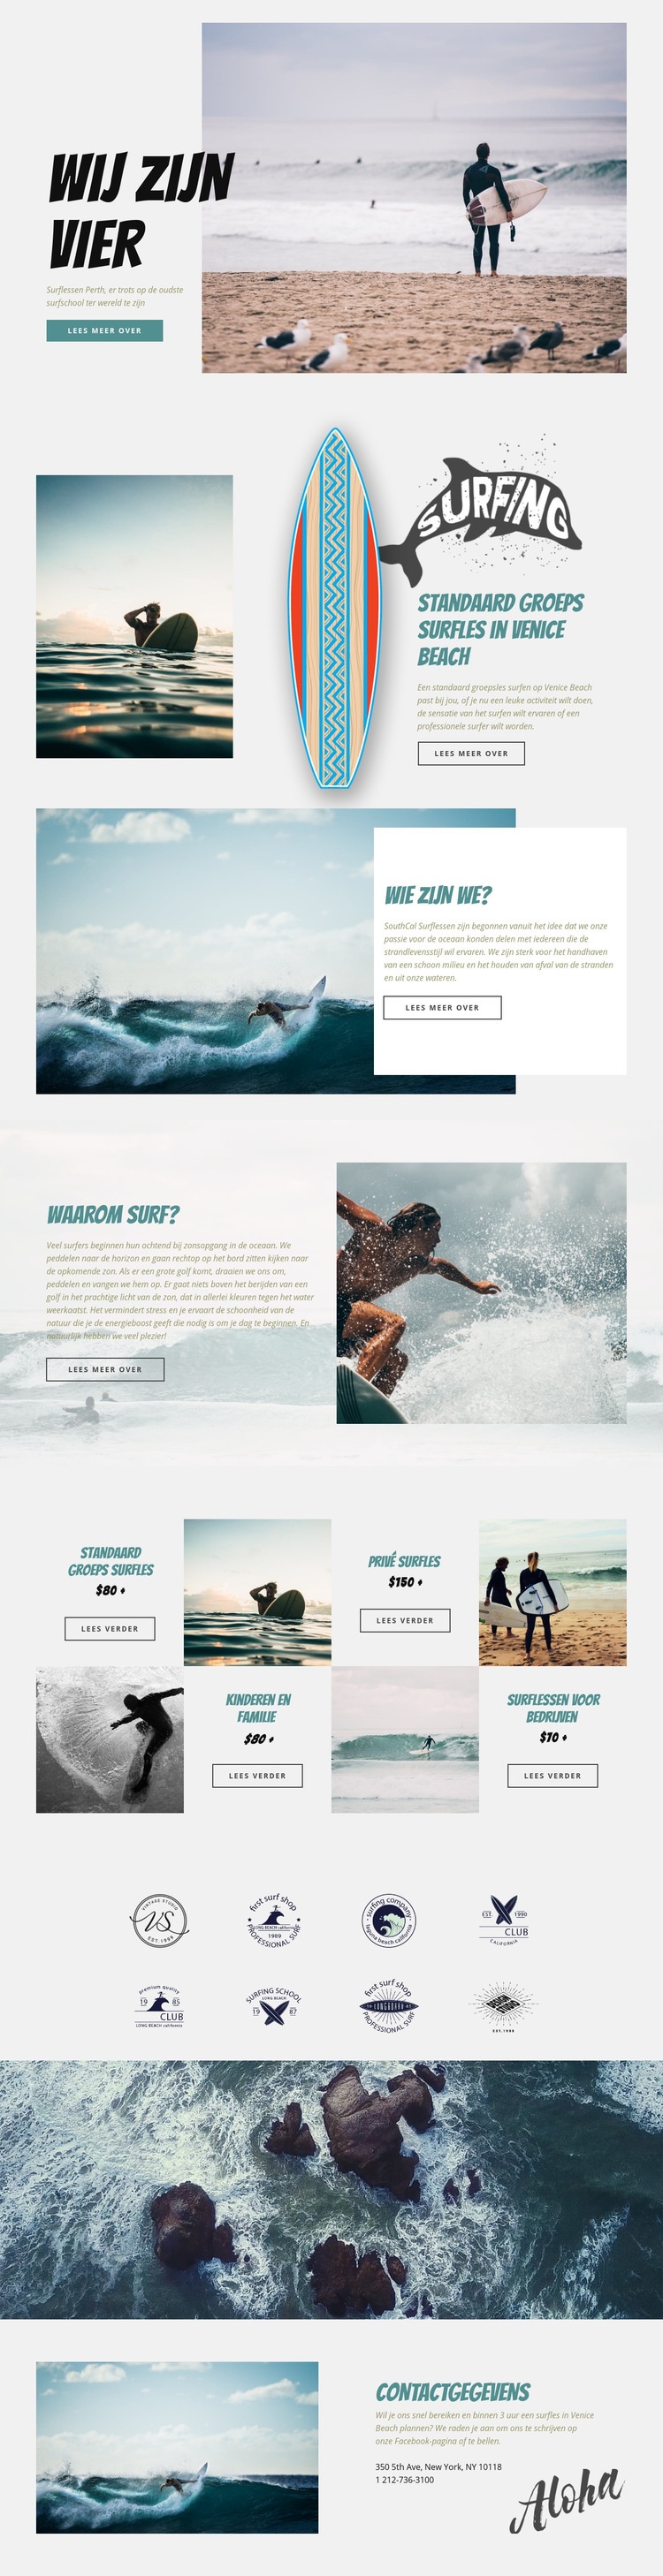 Surfen Website mockup